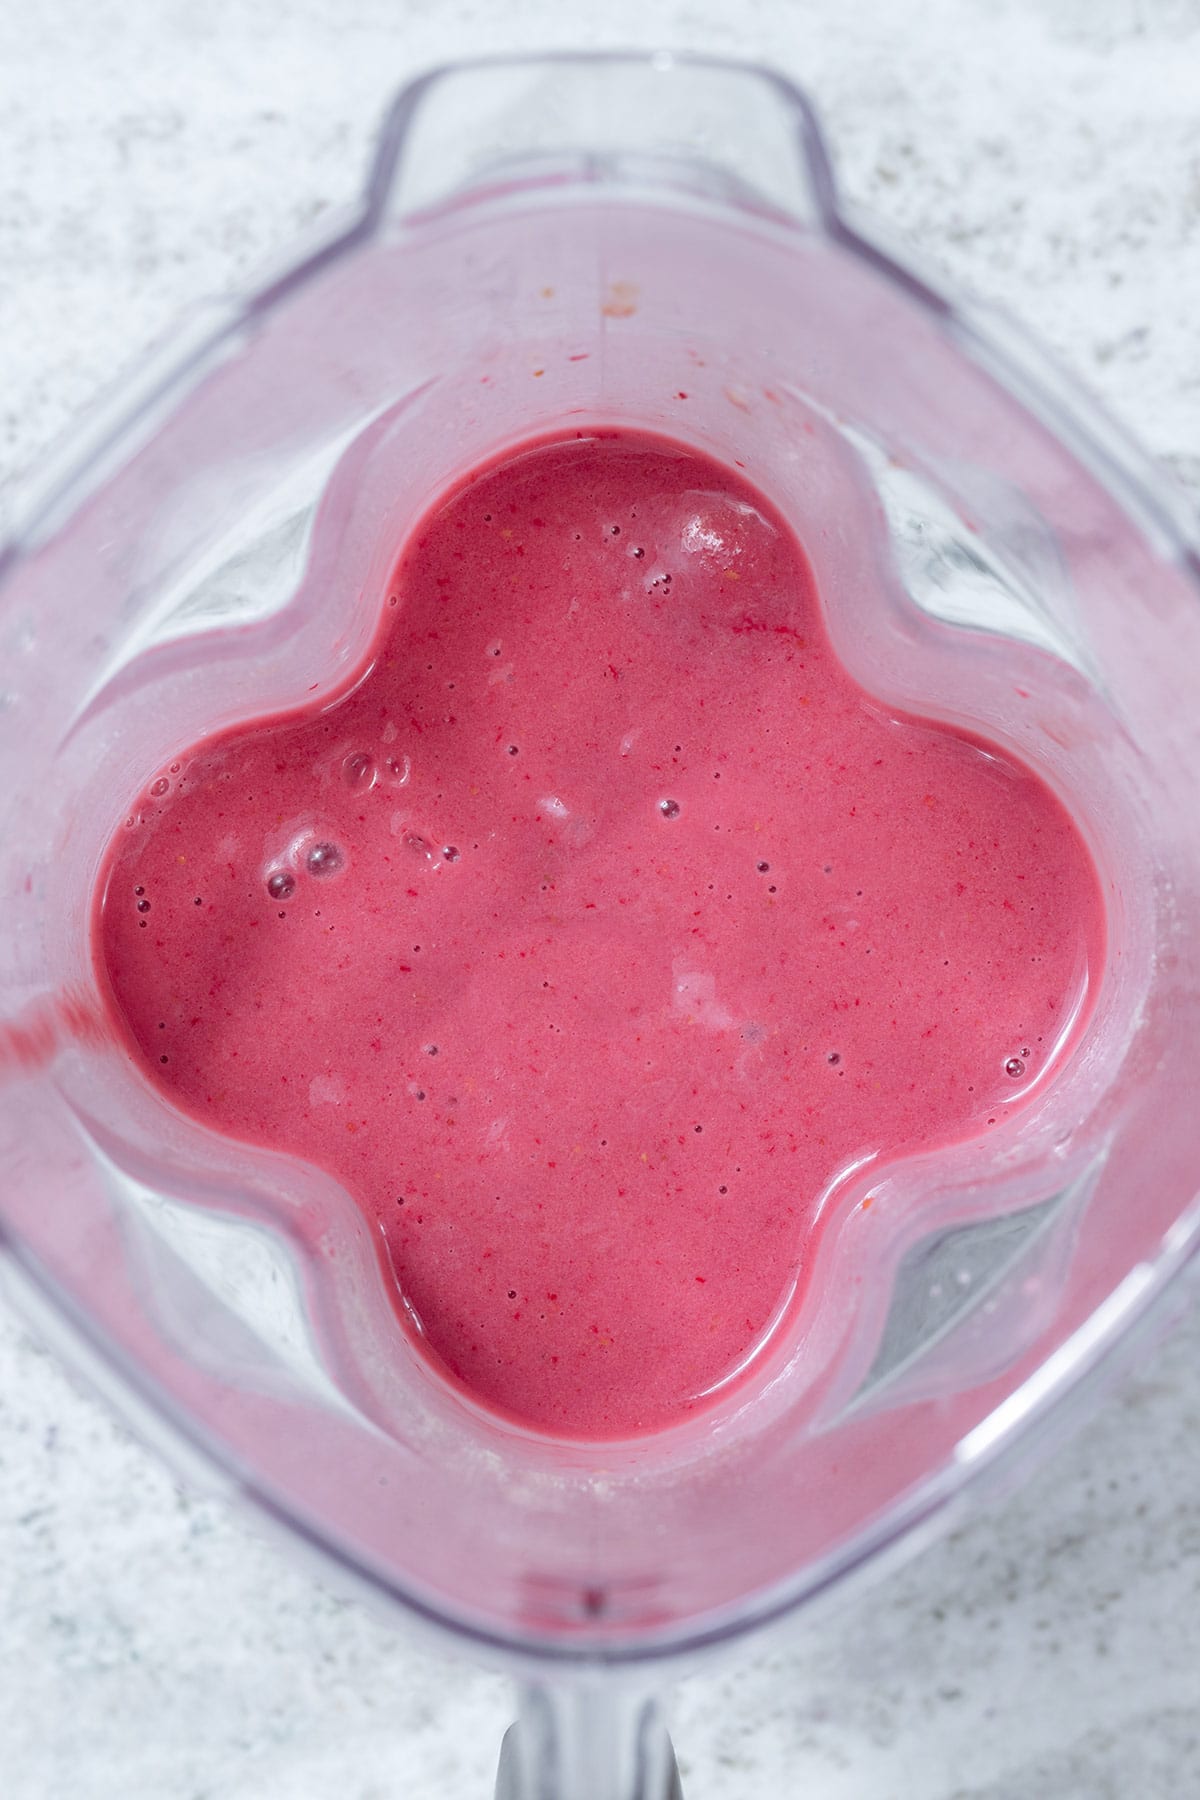 Creamy pink smoothie in a blender.